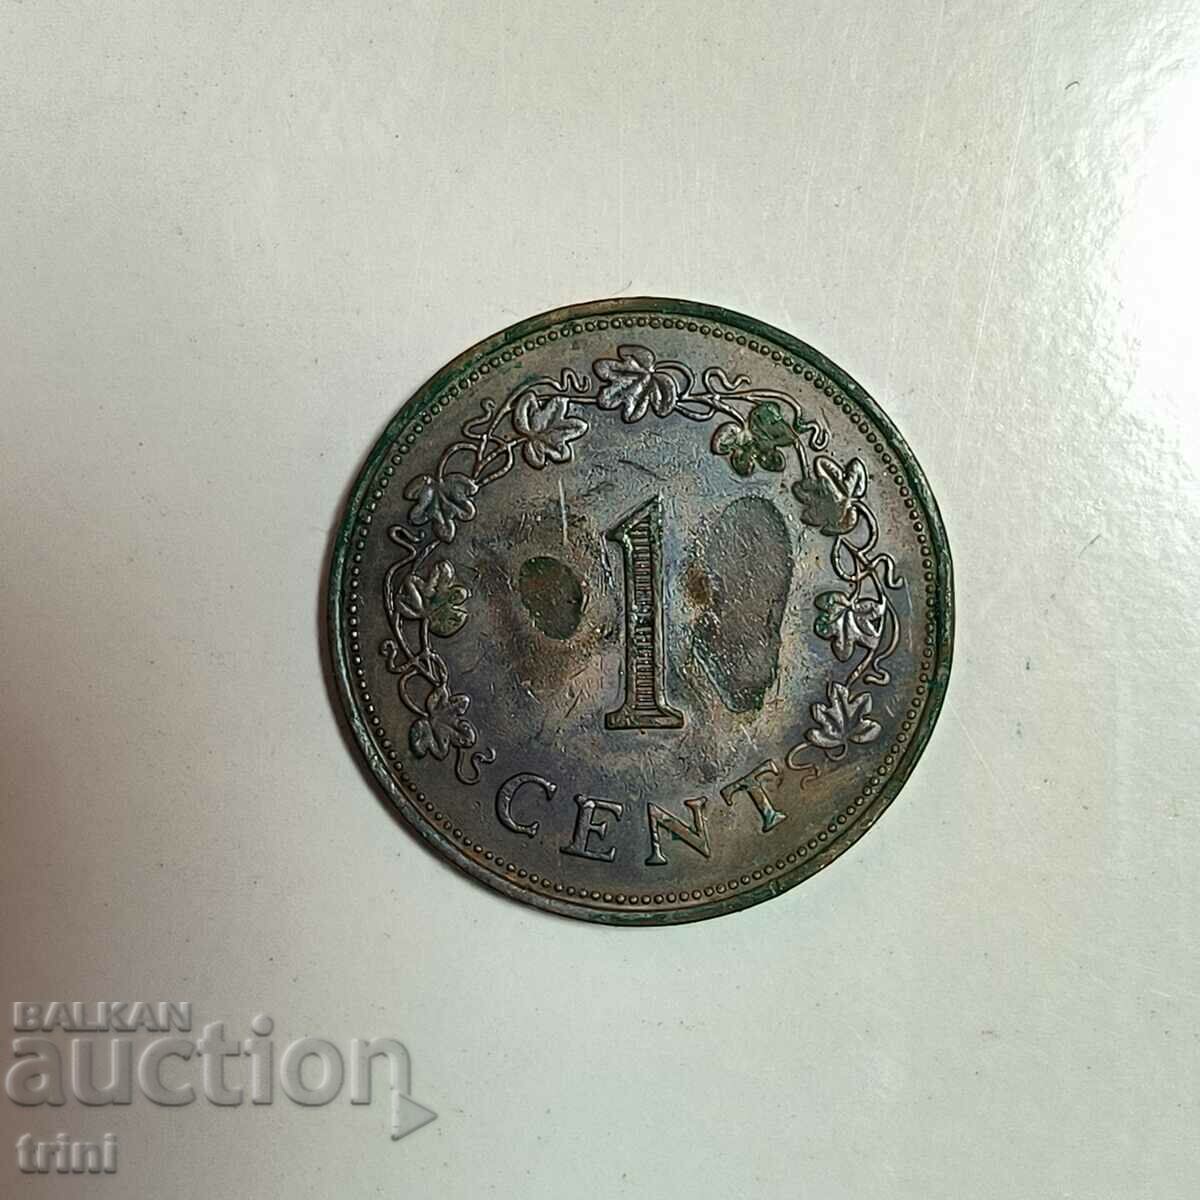 Malta 1 cent 1972 b25